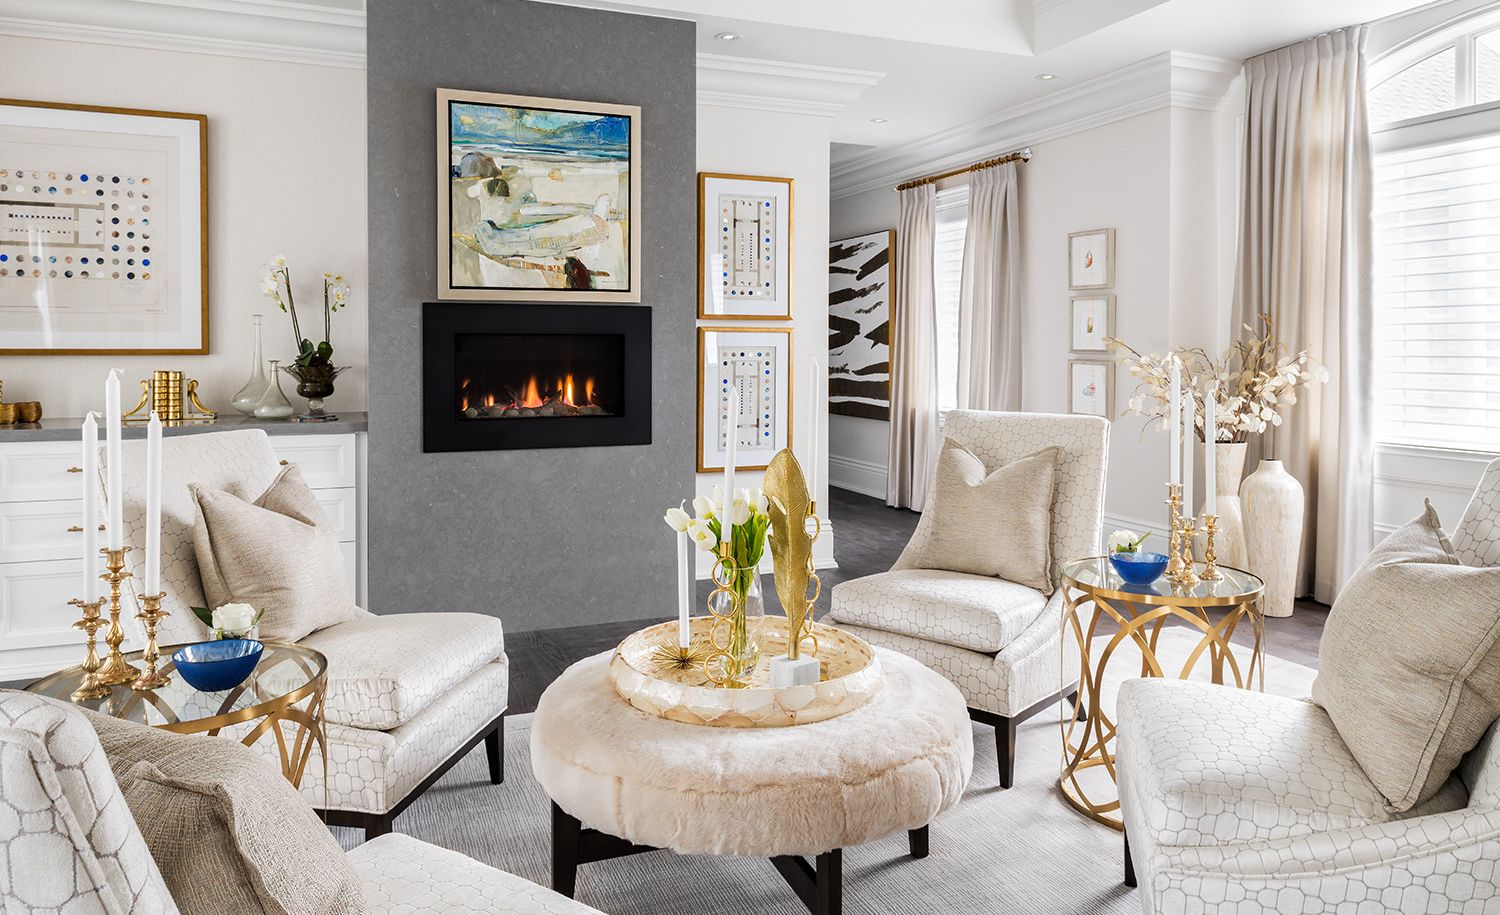 Cambria Carrick quartz fireplace surround in sitting room.